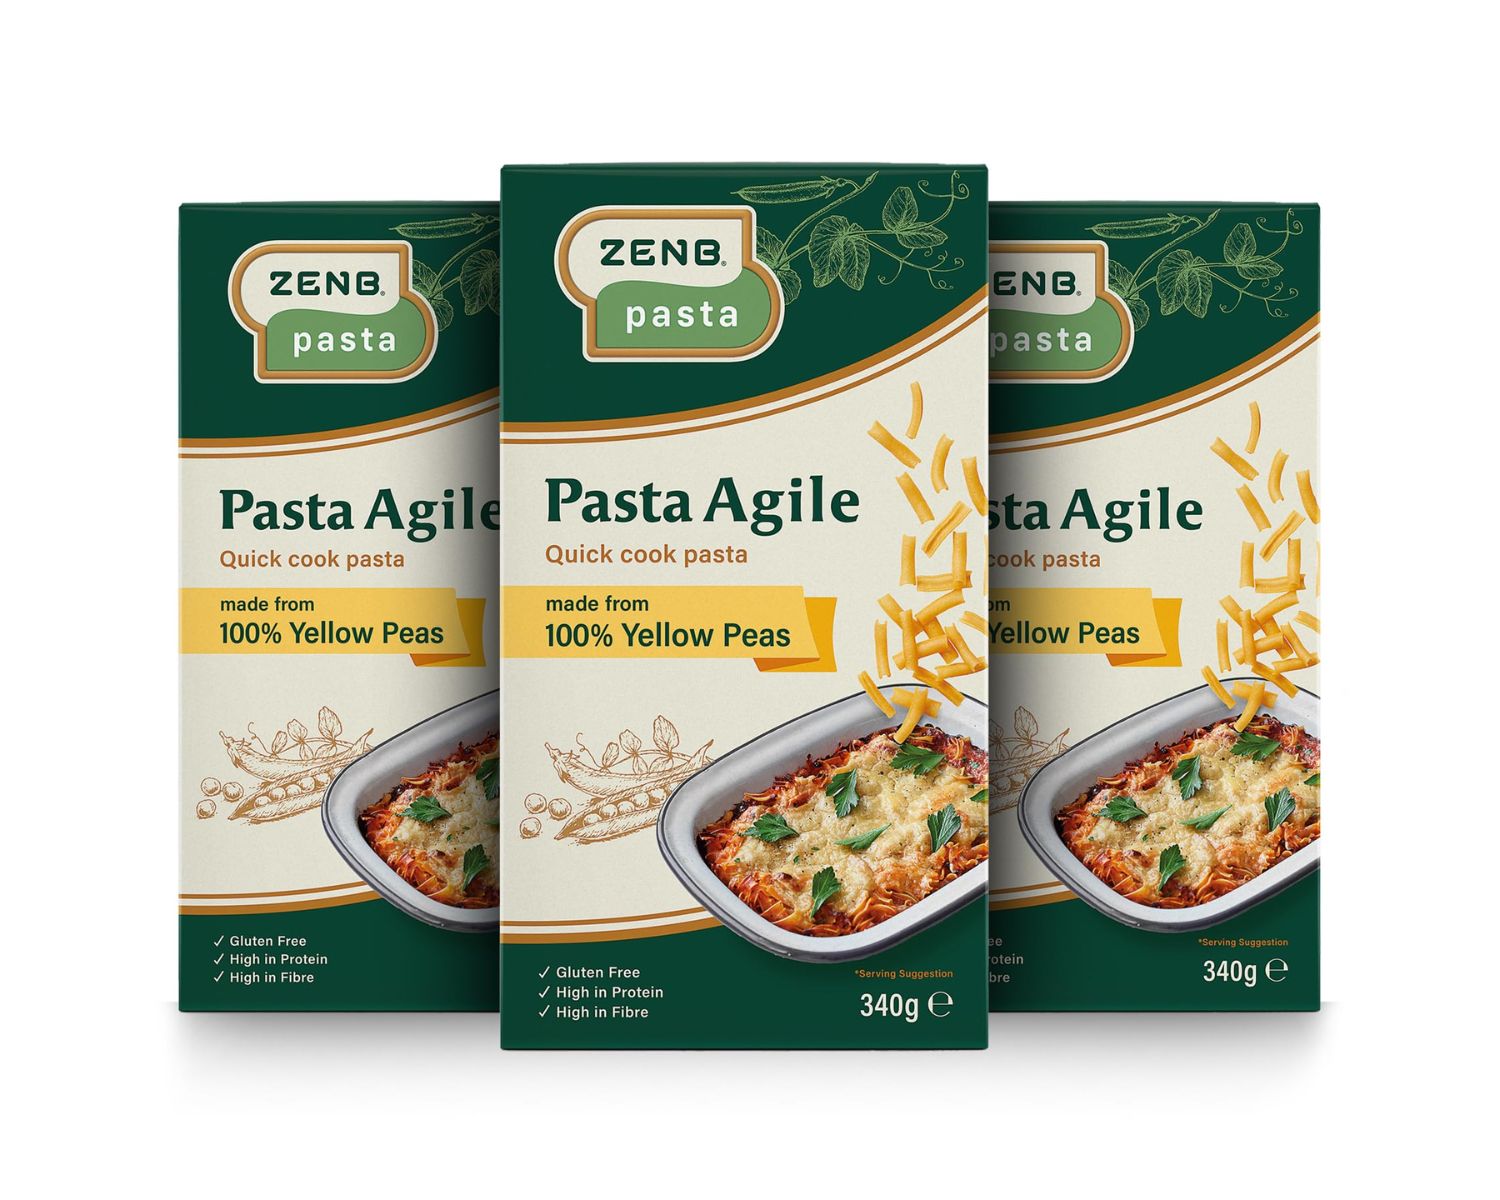 10-zenb-pasta-nutrition-facts